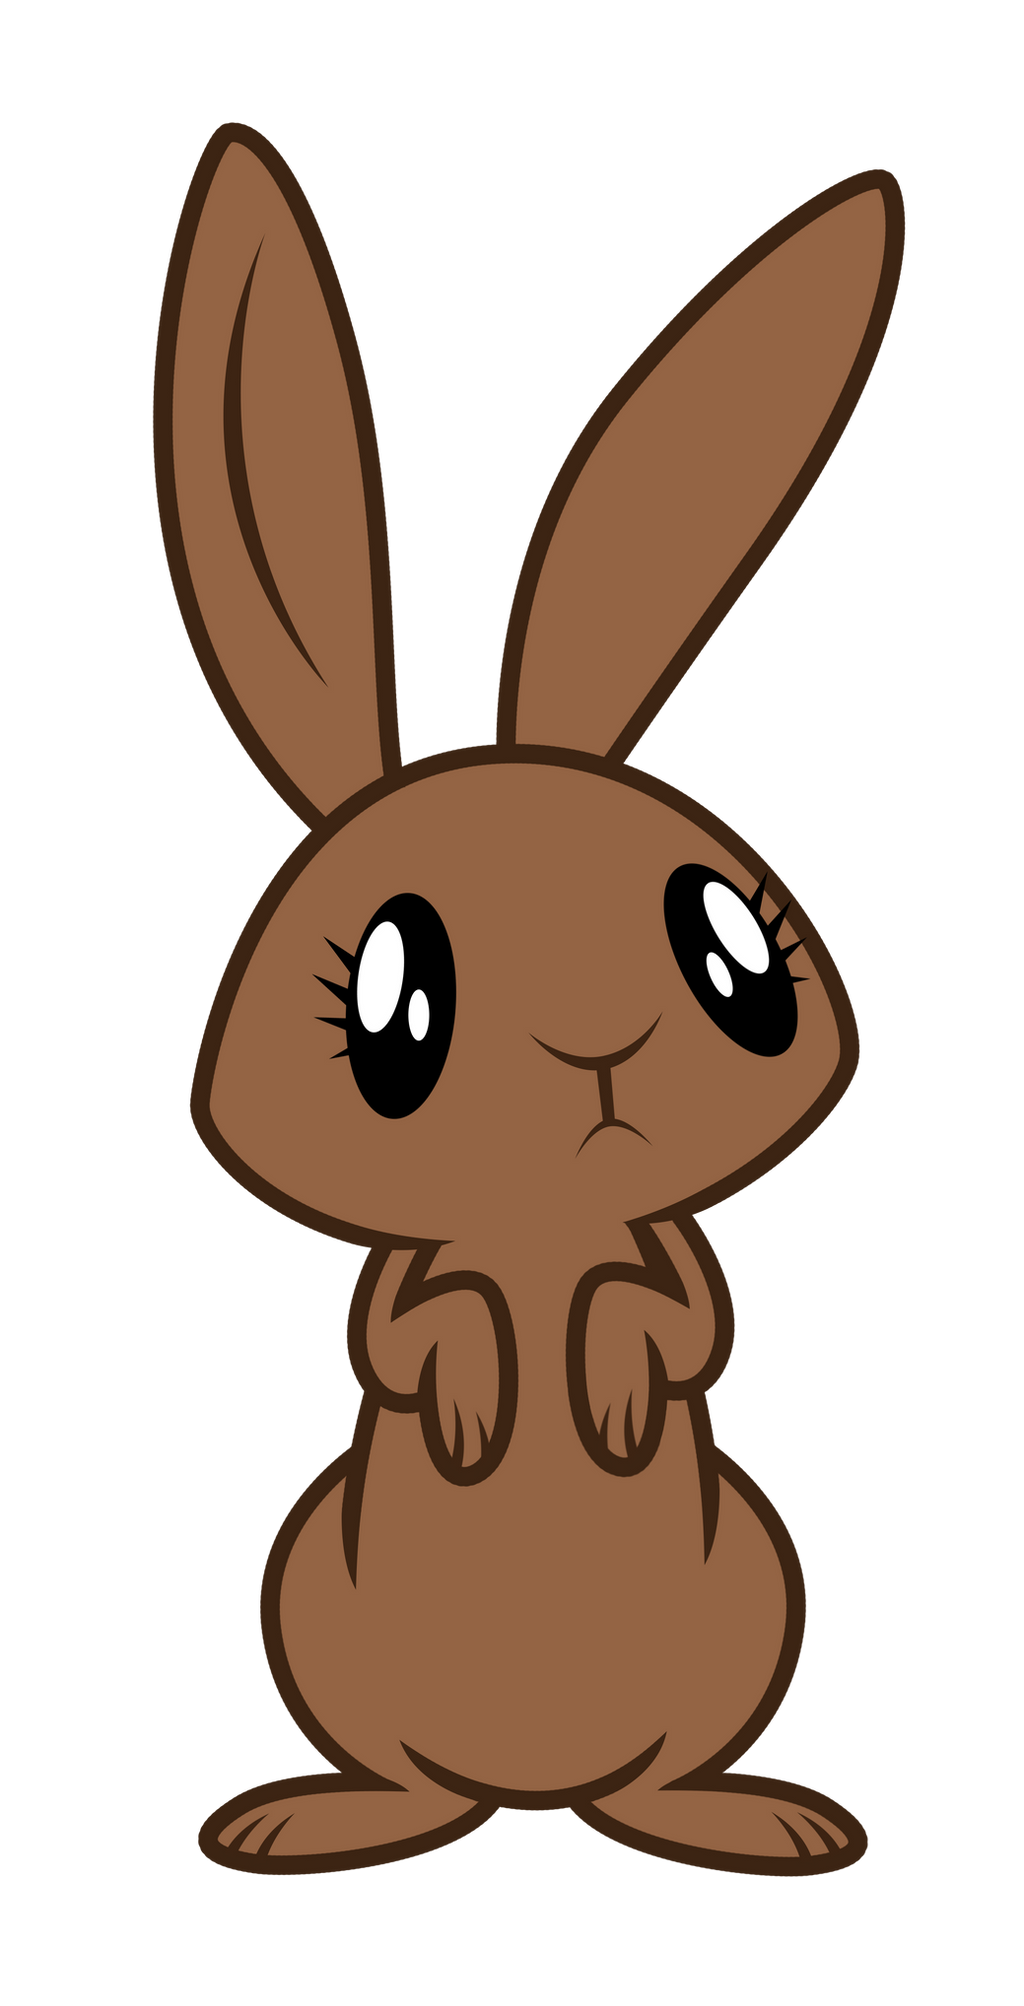 Download Vector: Bunny by EStories on DeviantArt